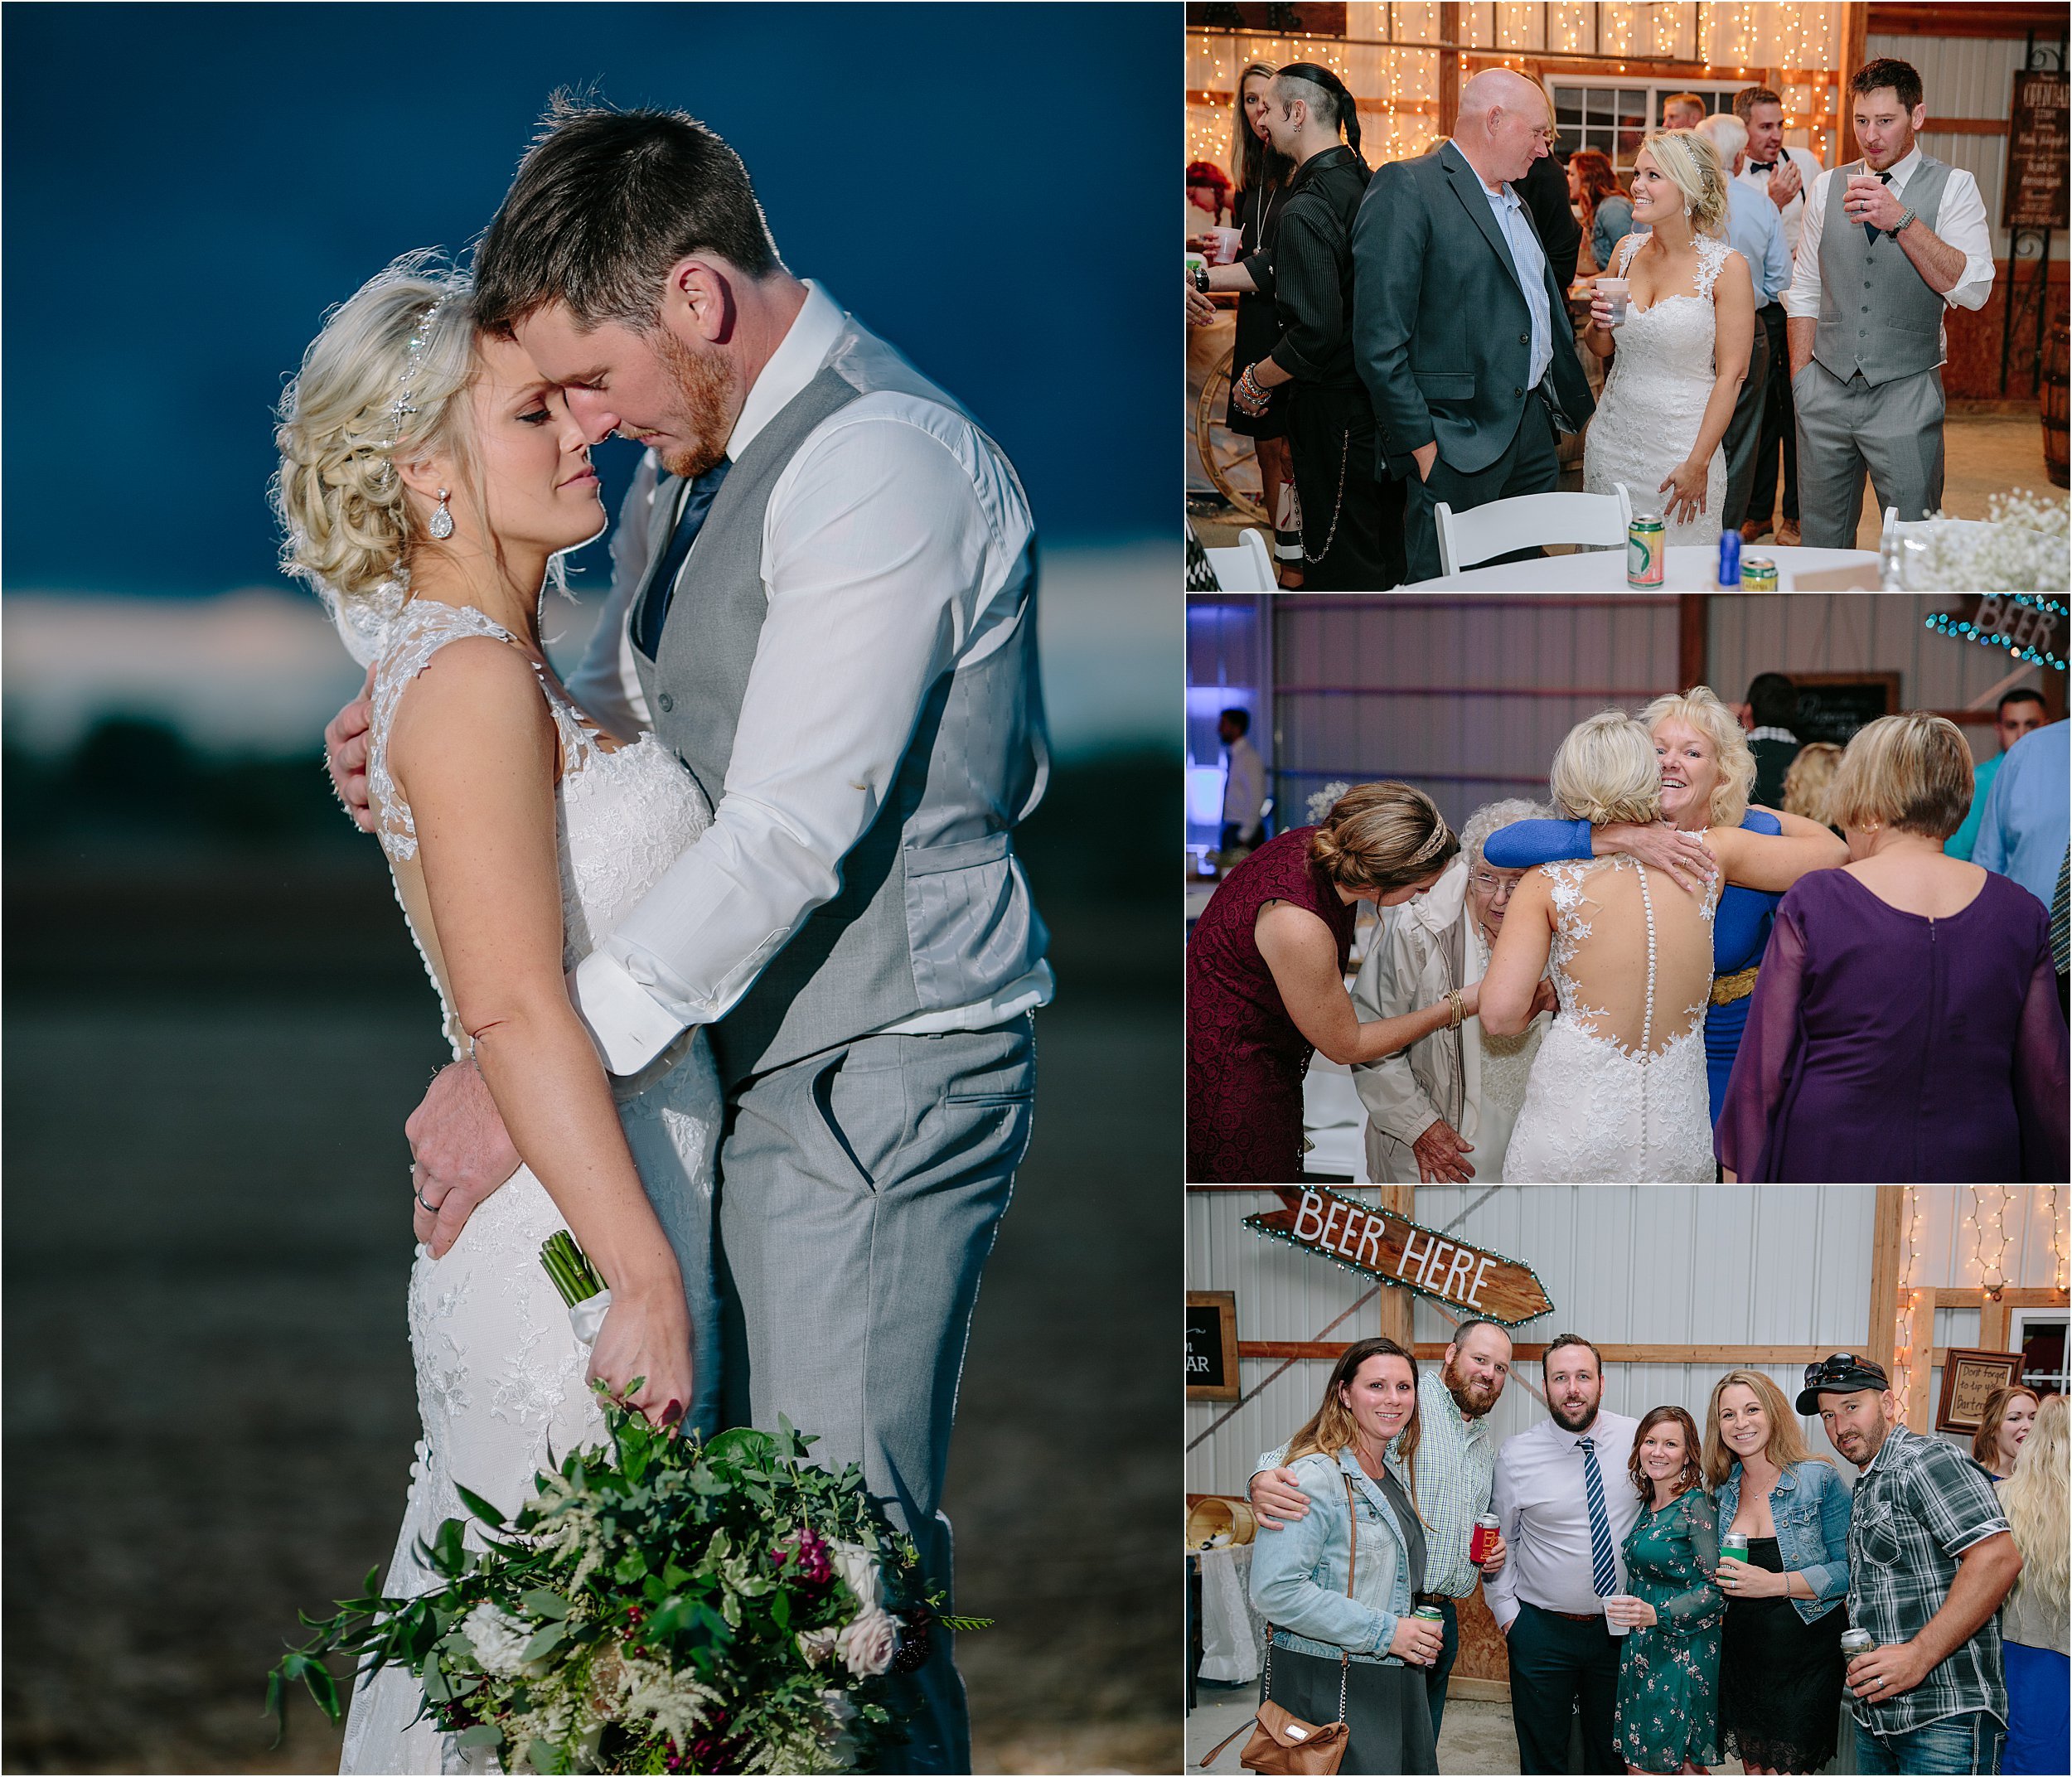 32-lit-photo-bride-groom-barn-reception.JPG